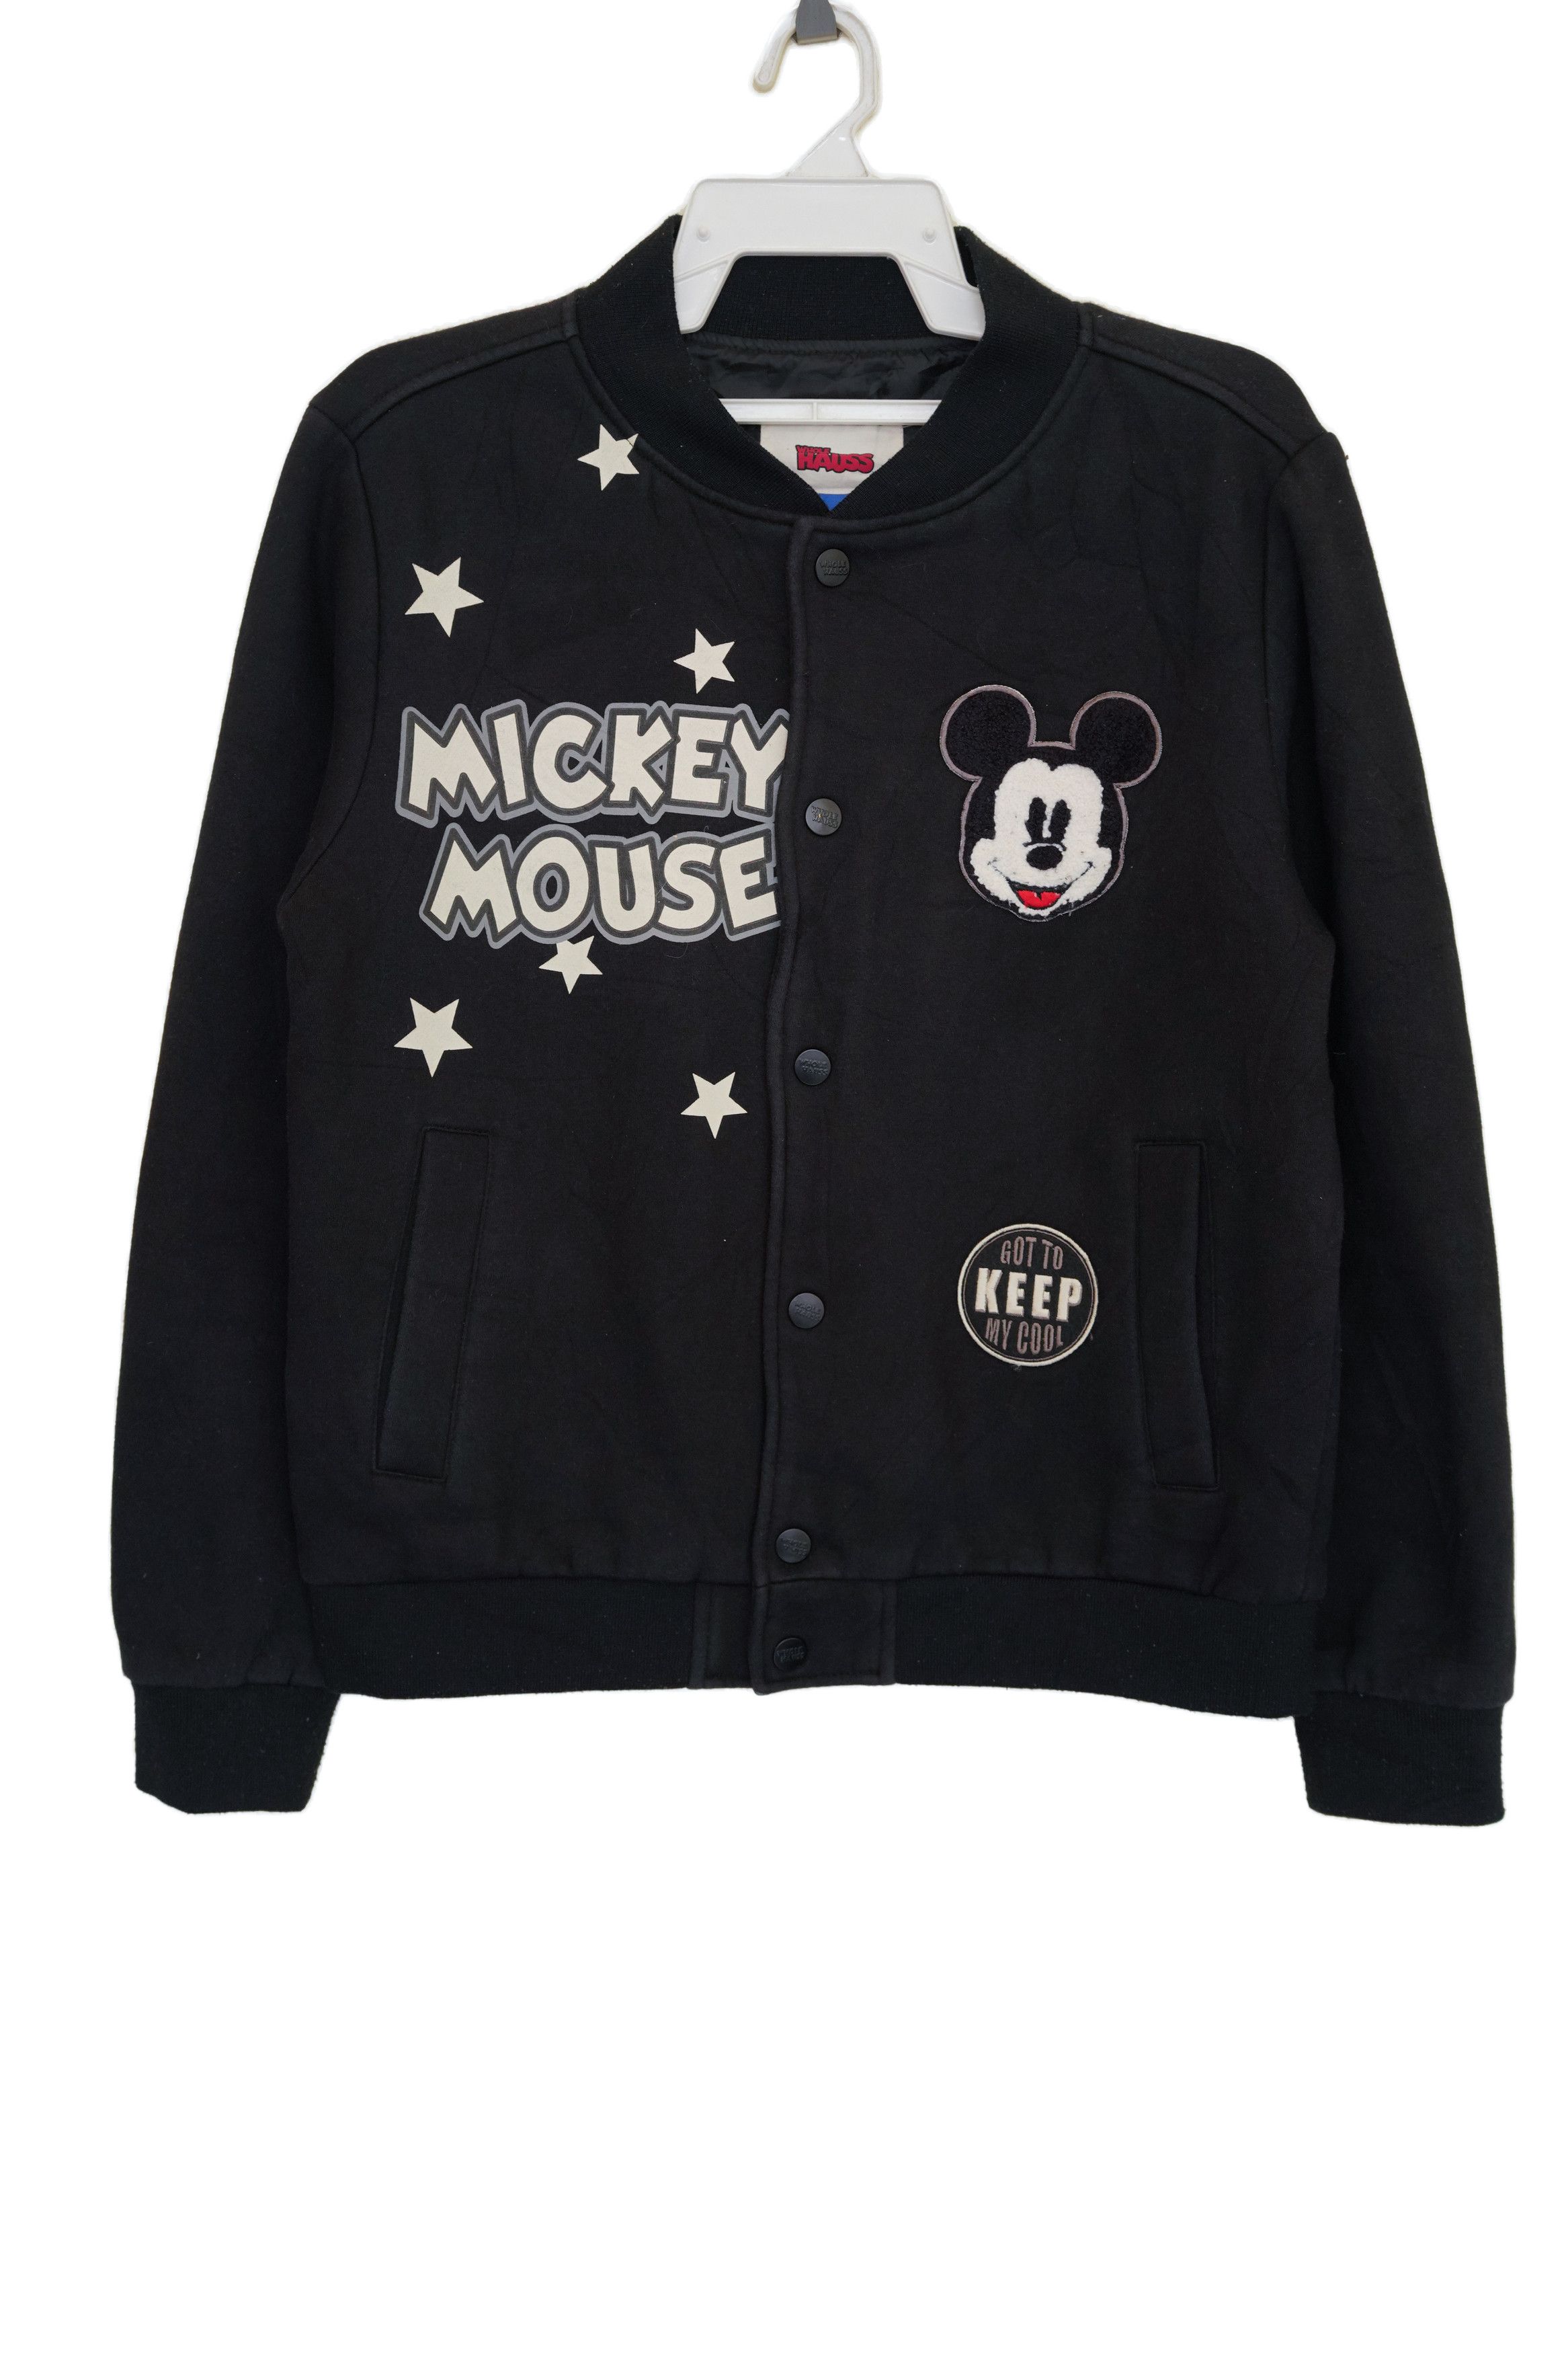 Disney Disney x Whole Hauss Mickey Mouse Versity Jacket | Grailed